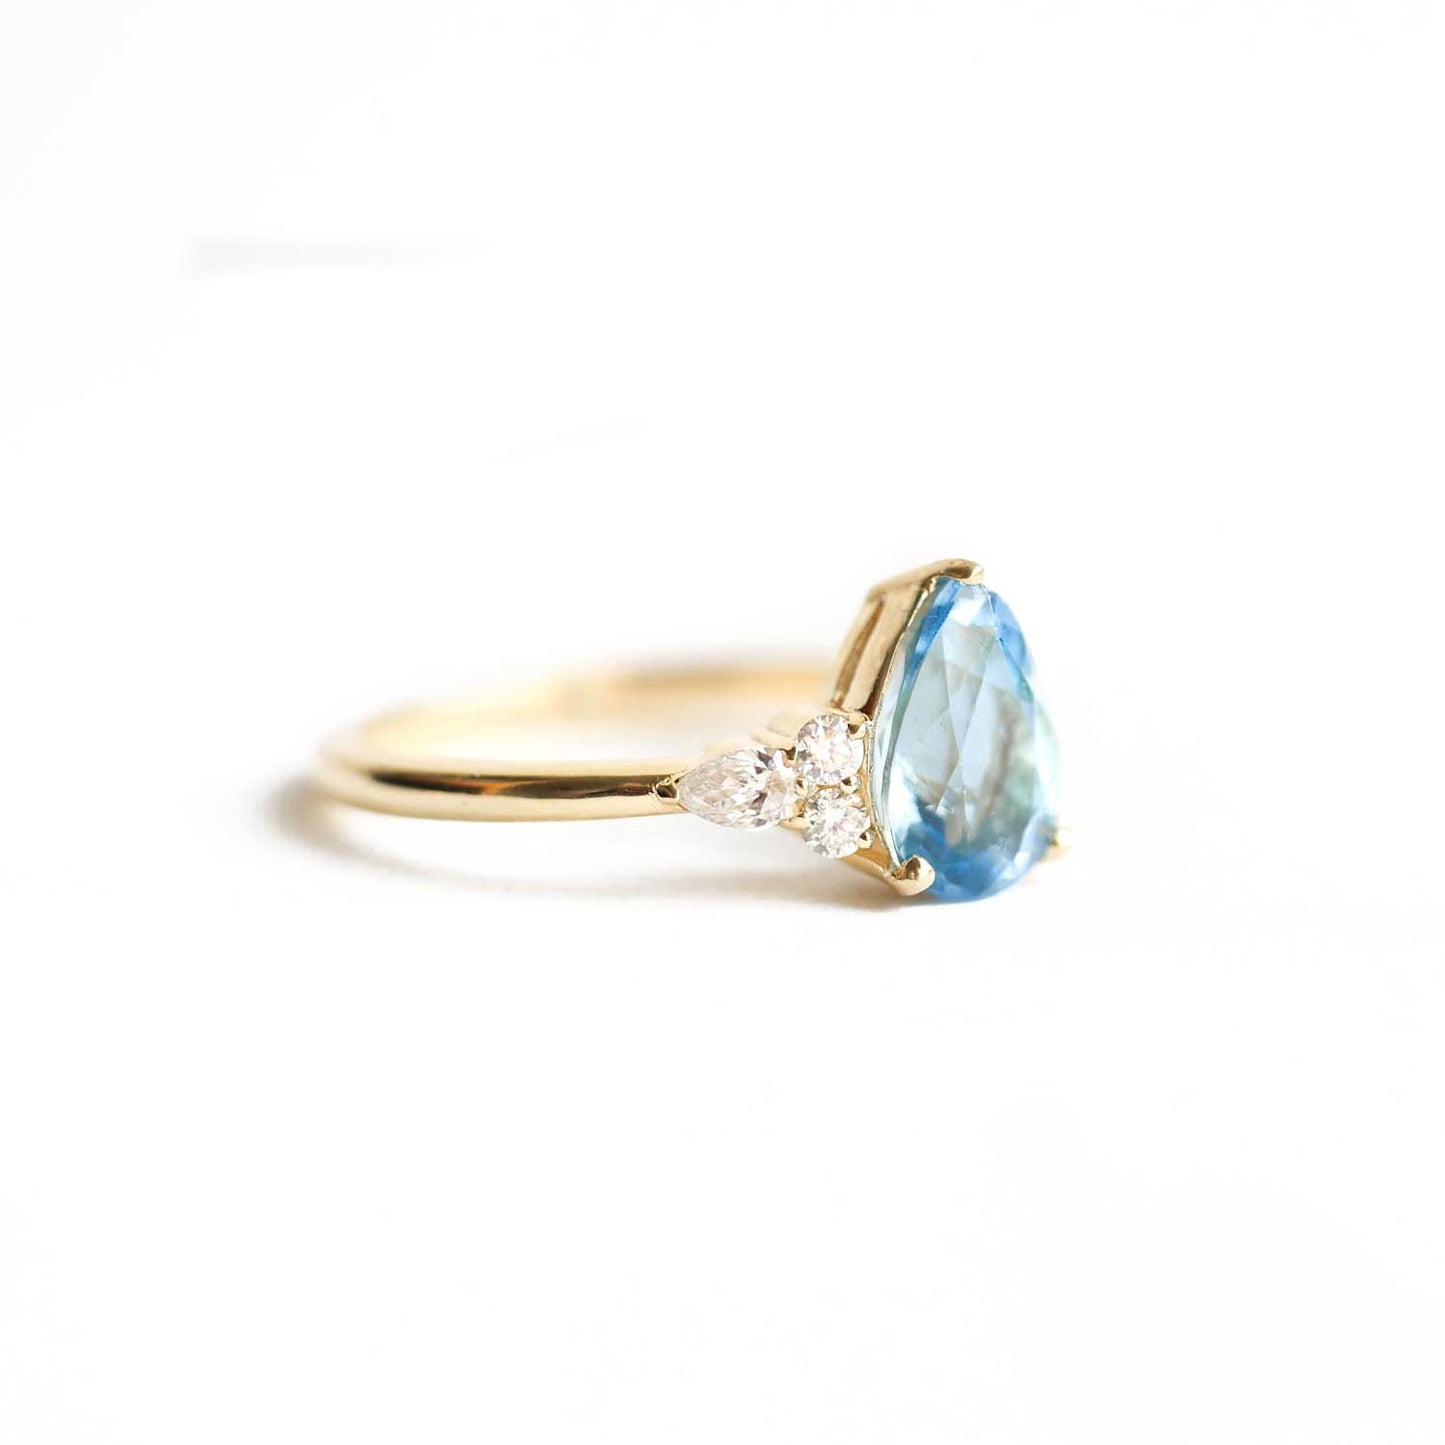 Aquamarine, Pear, and Round Diamond Engagement Ring